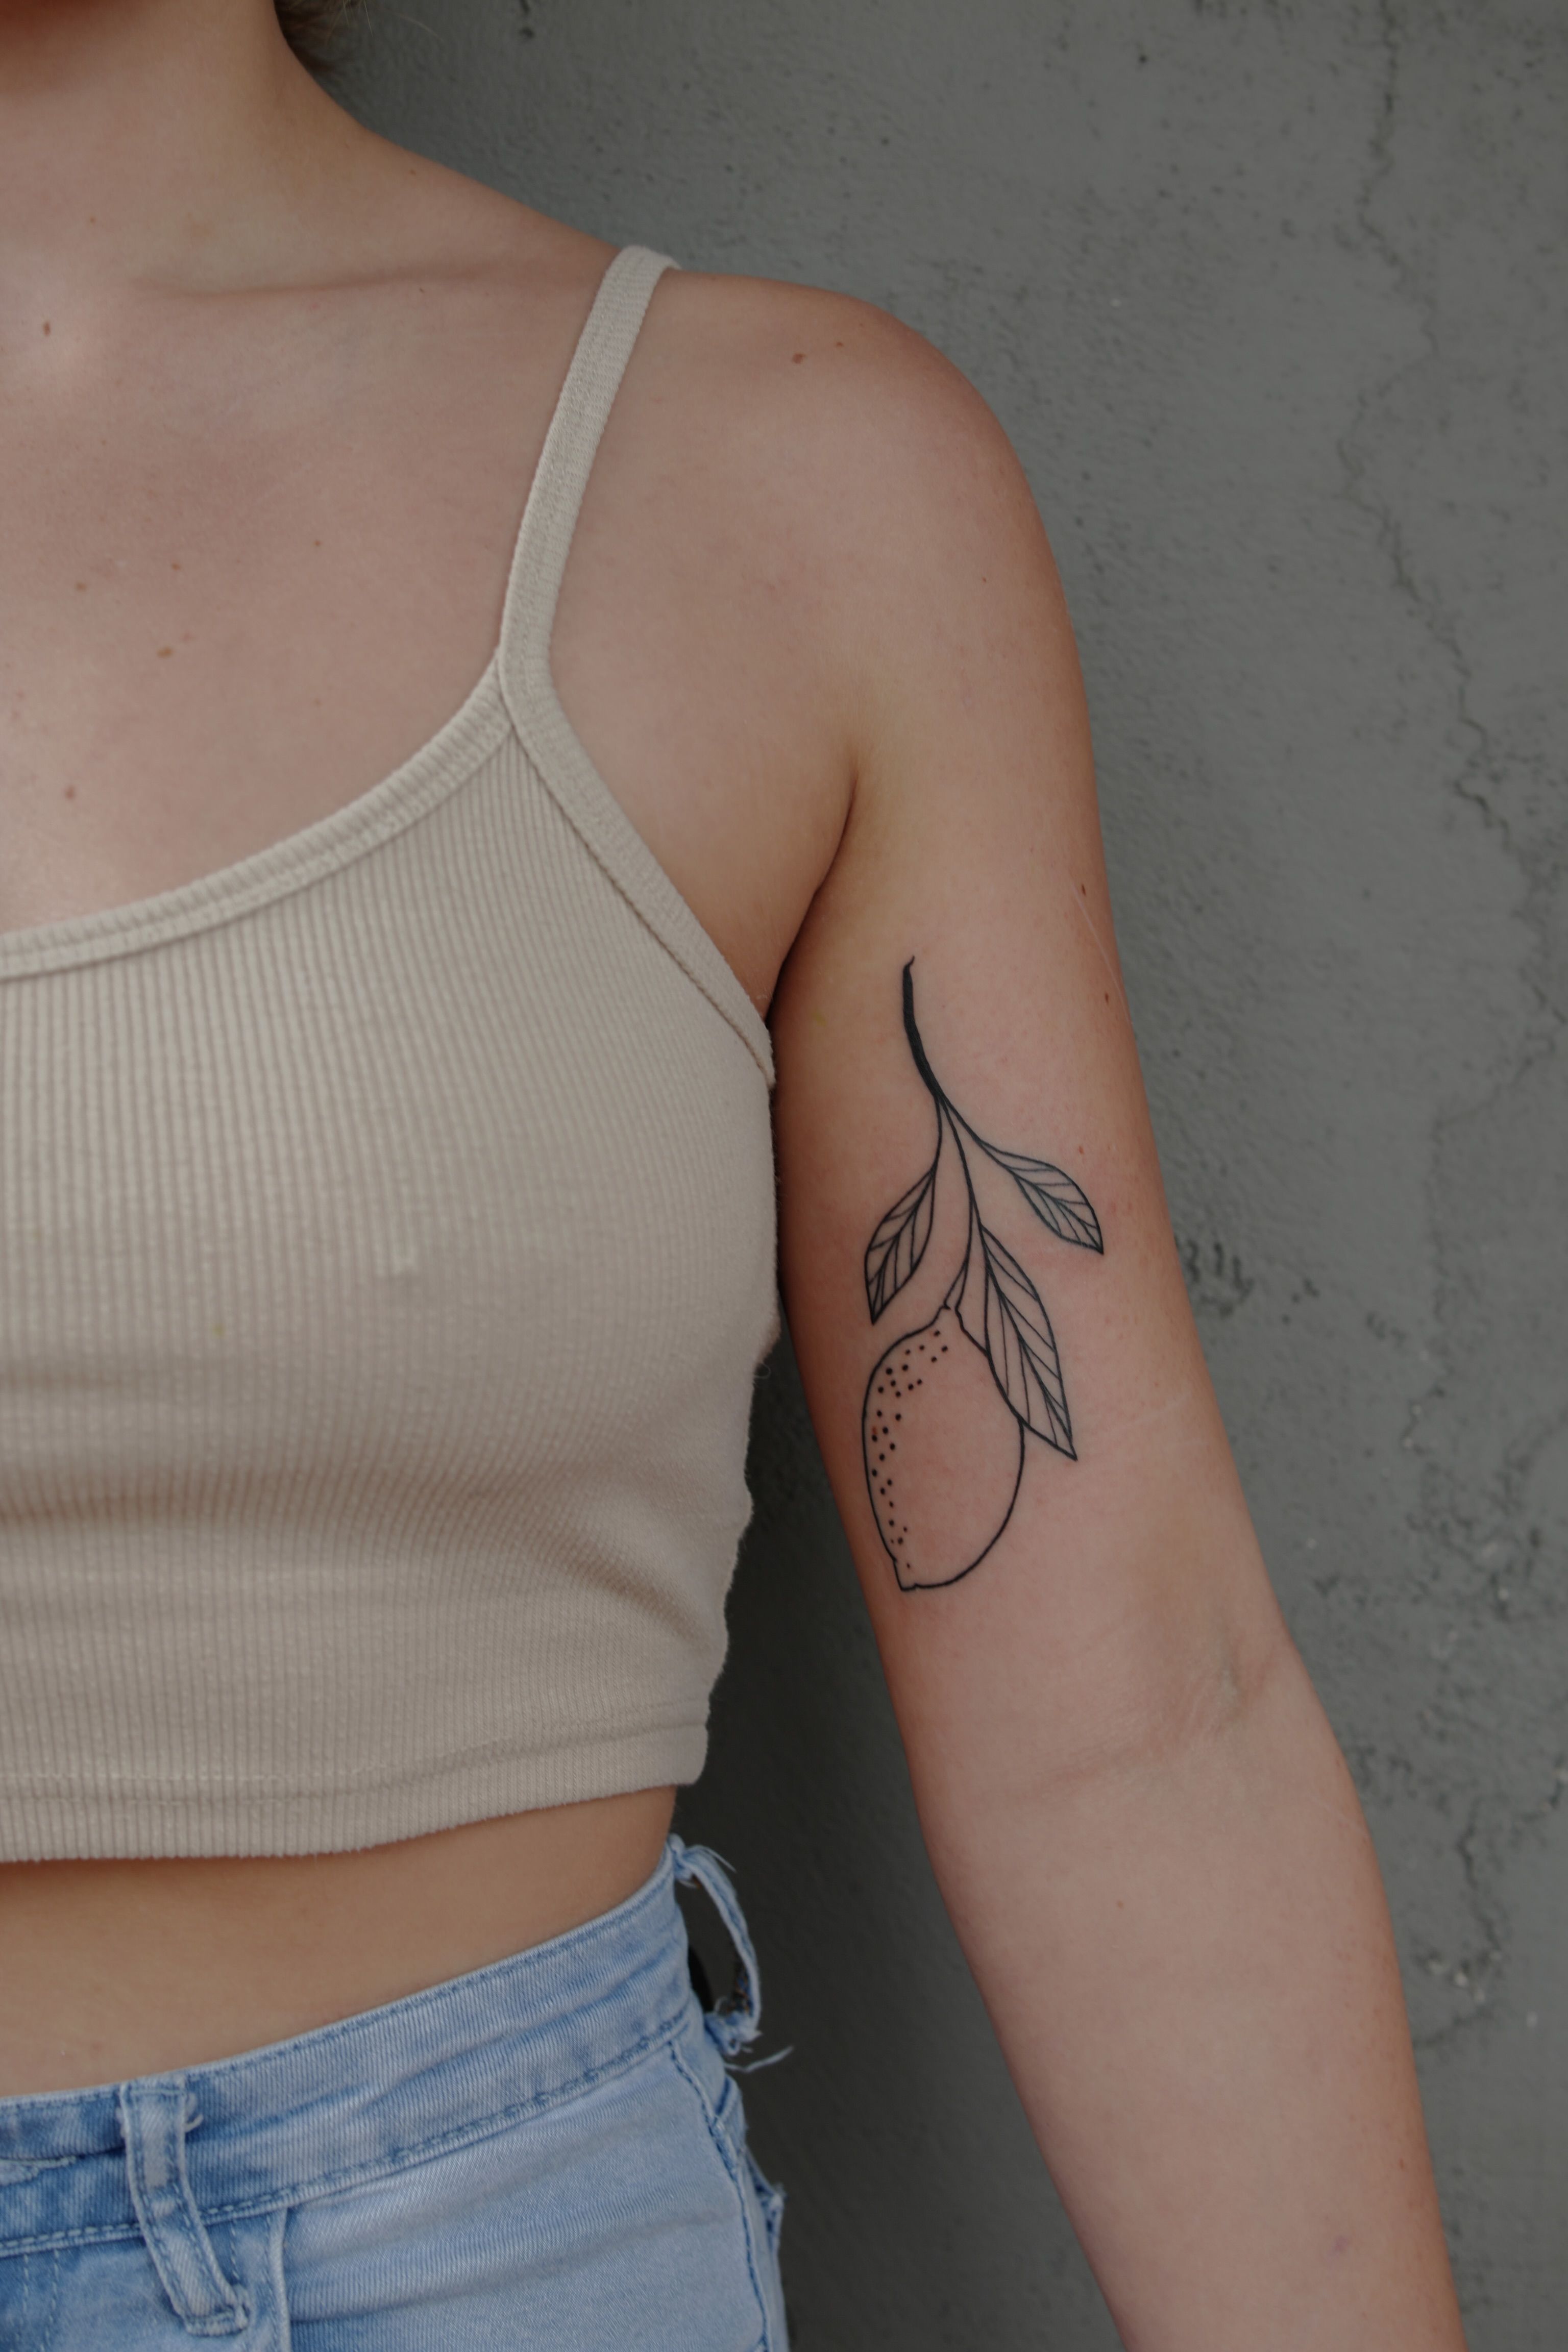 Tiny lemon tattoo | Tattoos, Matching tattoos, Inspirational tattoos